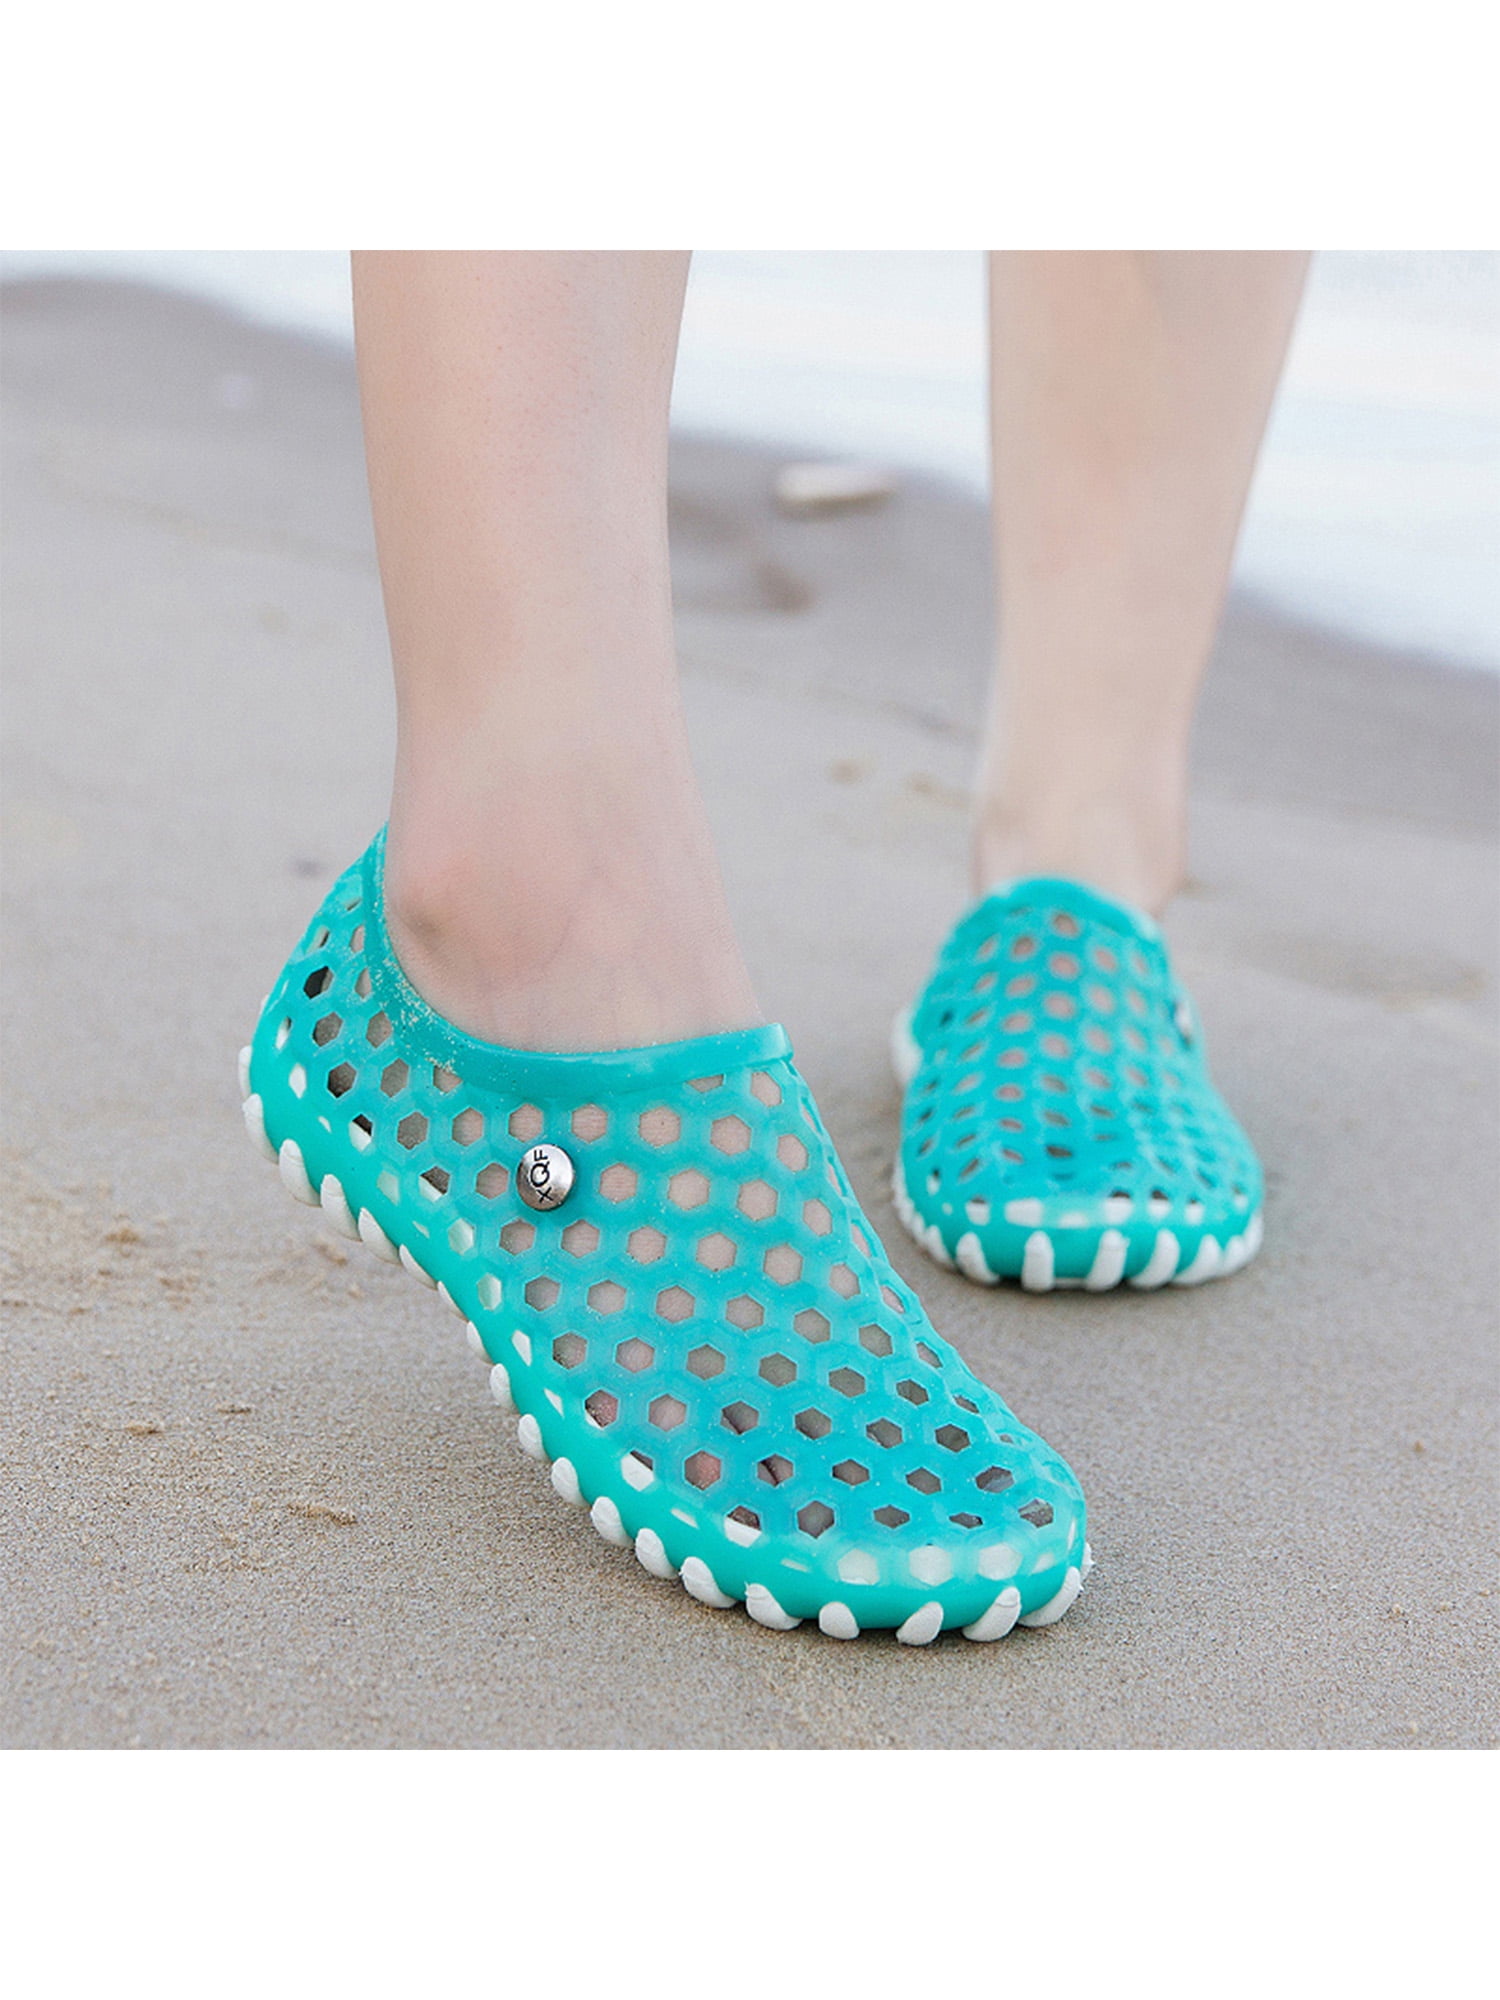 Men's Garden Clogs Non Slip Shoes Casual Beach Sandals Lightweight Water Shoes